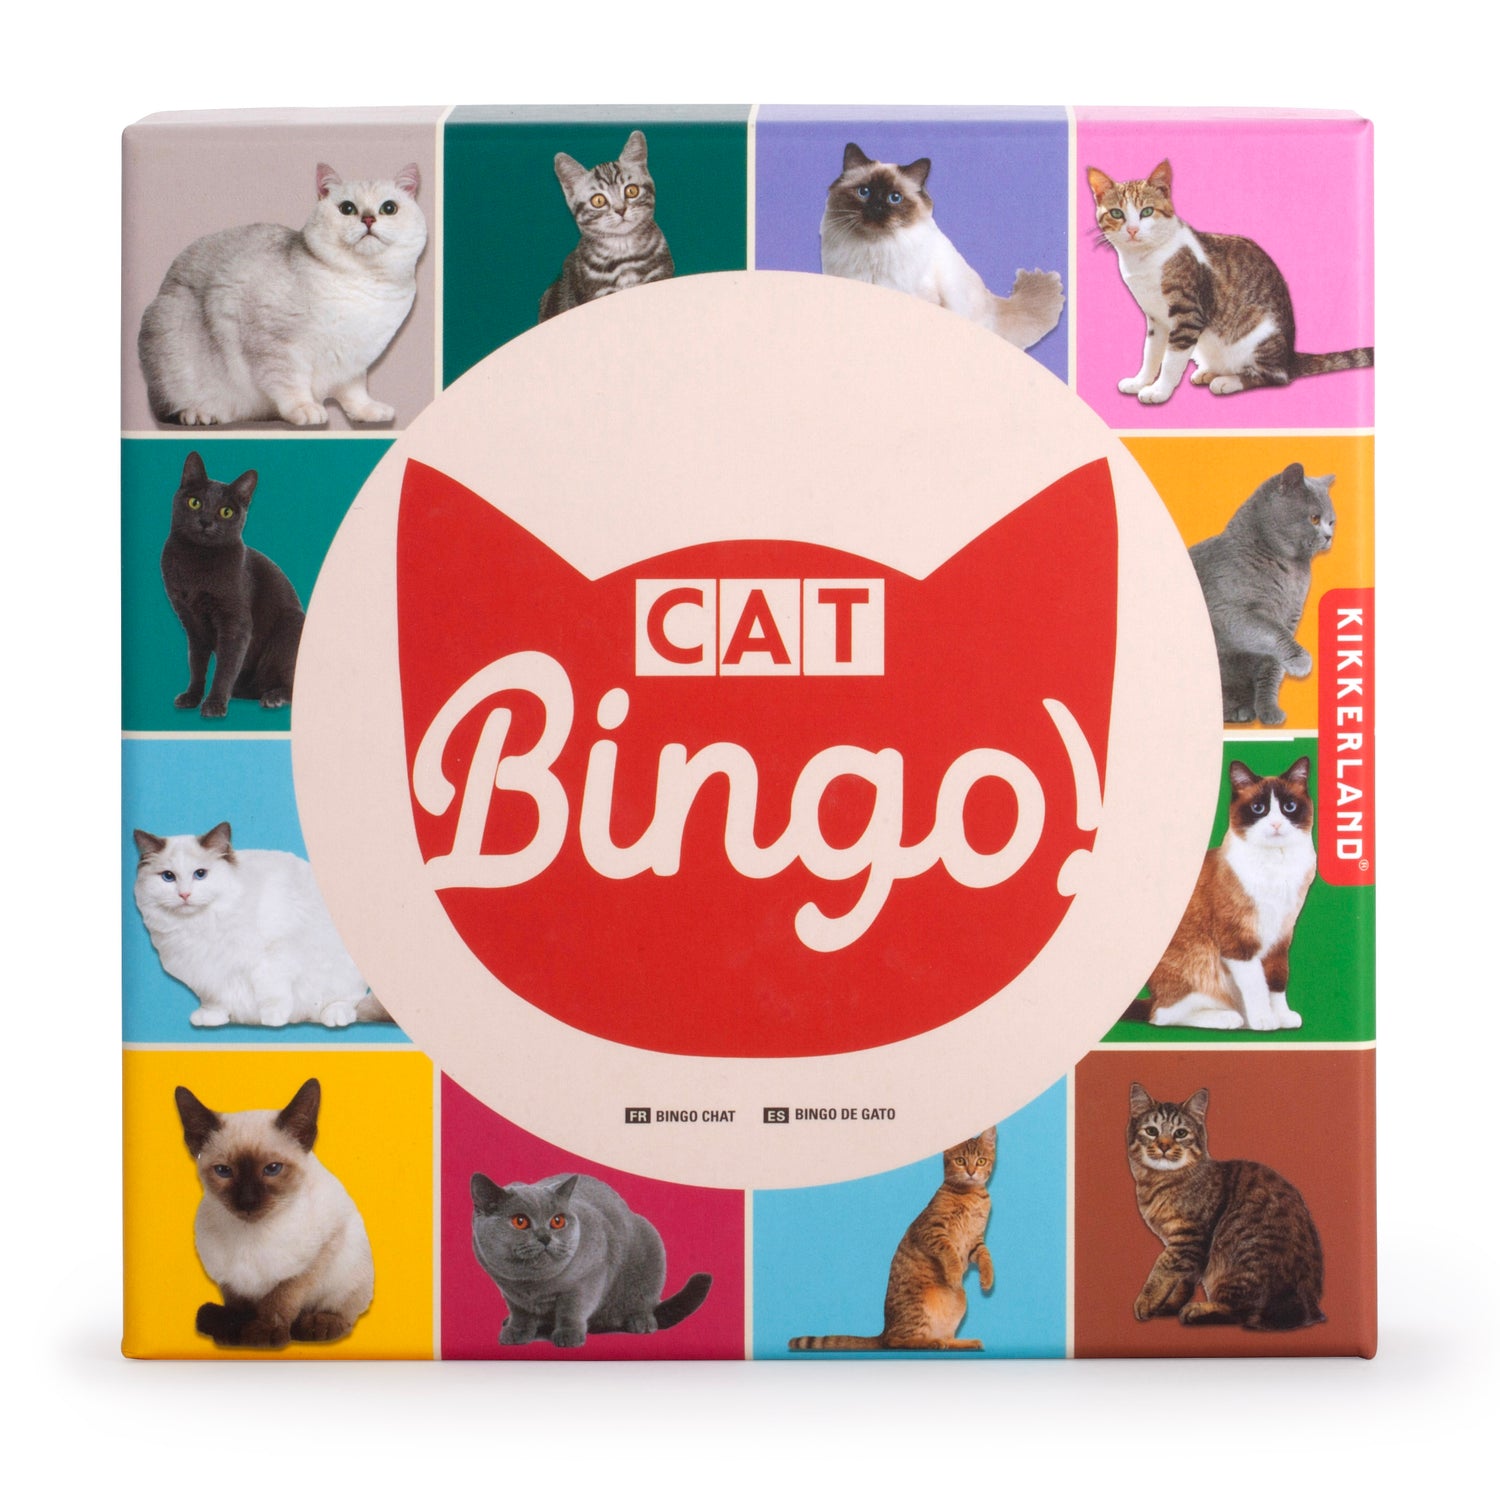 Cat Bingo